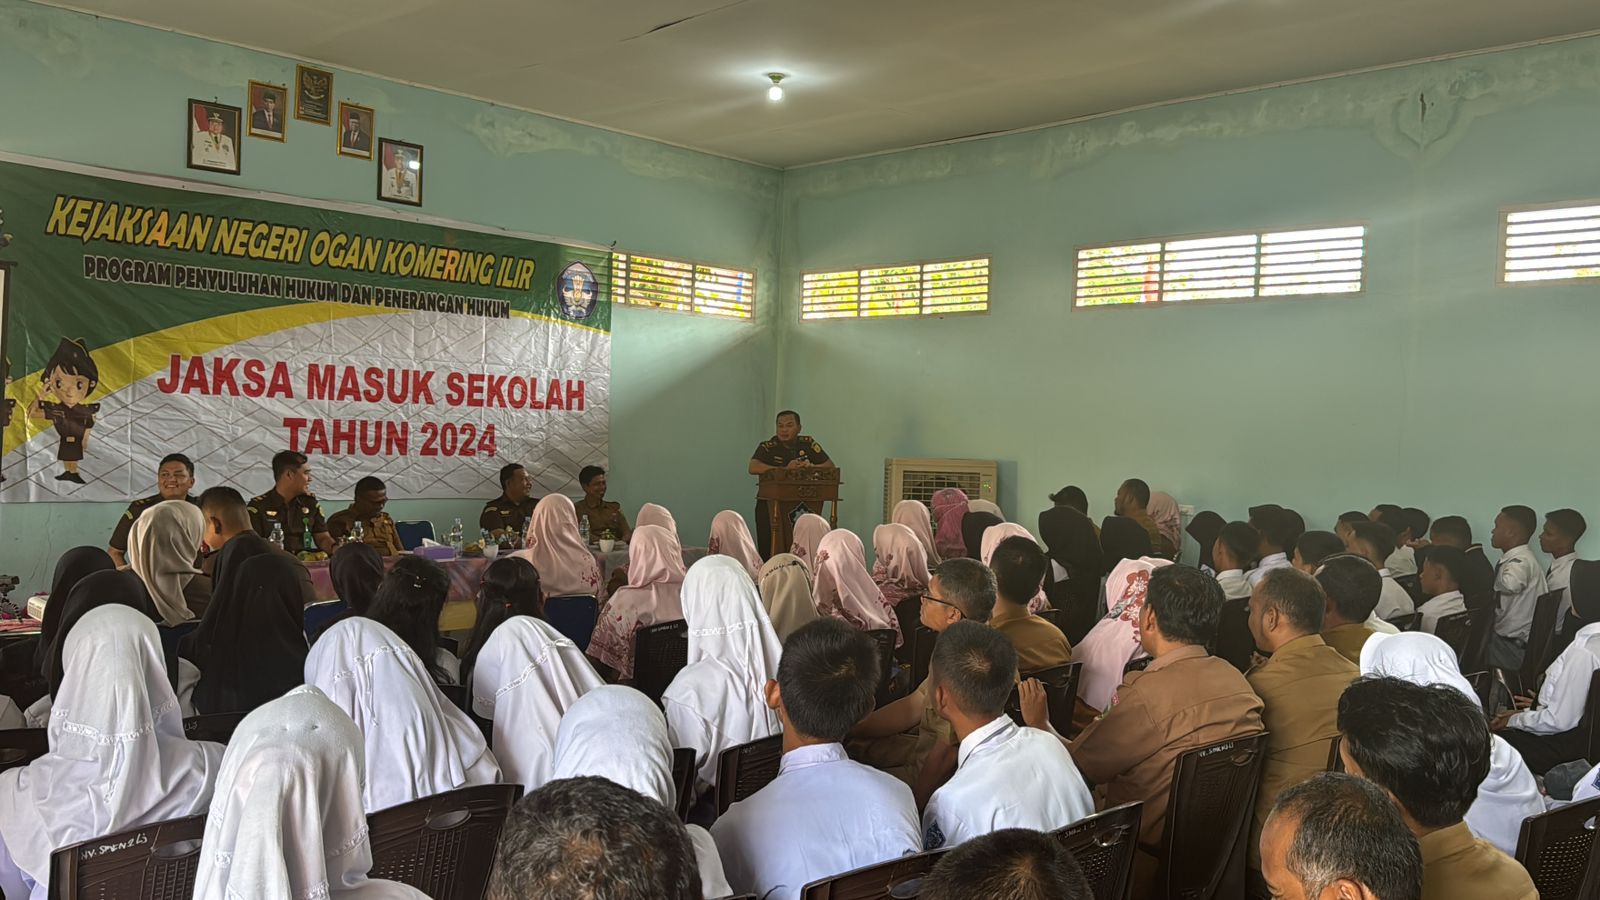 Cegah Pelanggaran Hukum, Jaksa Masuk Sekolah Kunjungi SMKN 1 Lempuing Jaya OKI